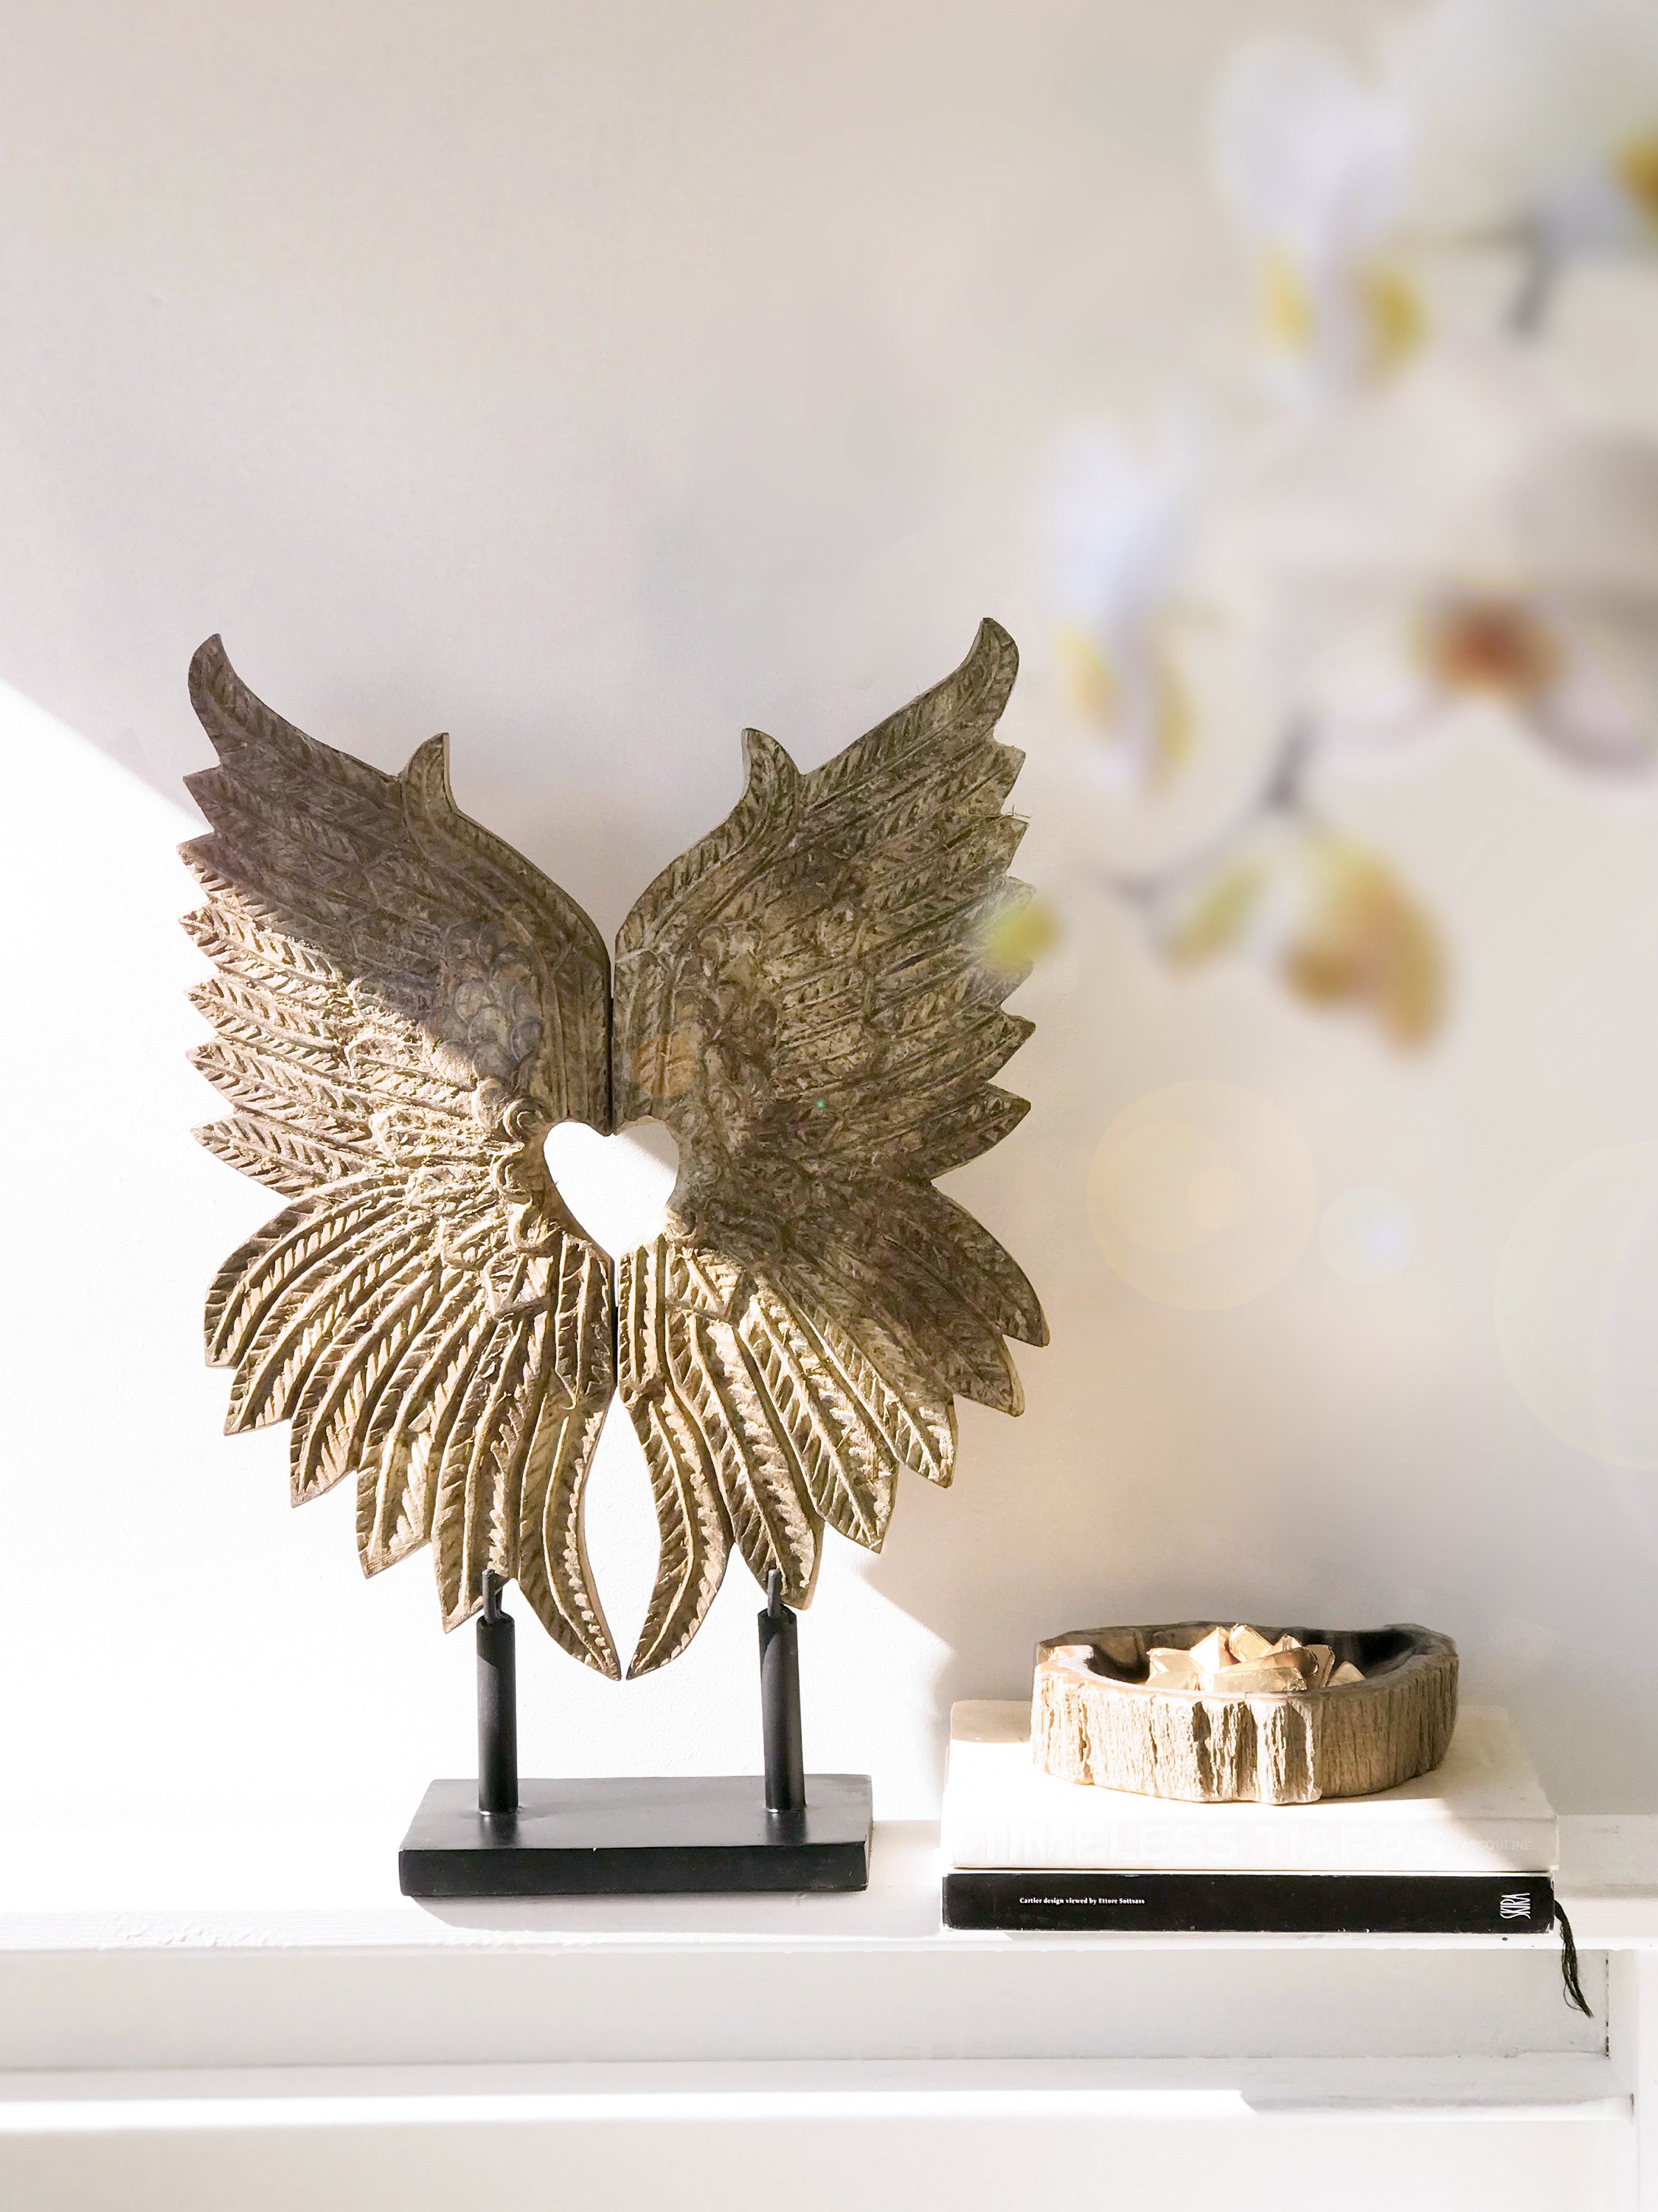 Les ailes de Garuda de Java